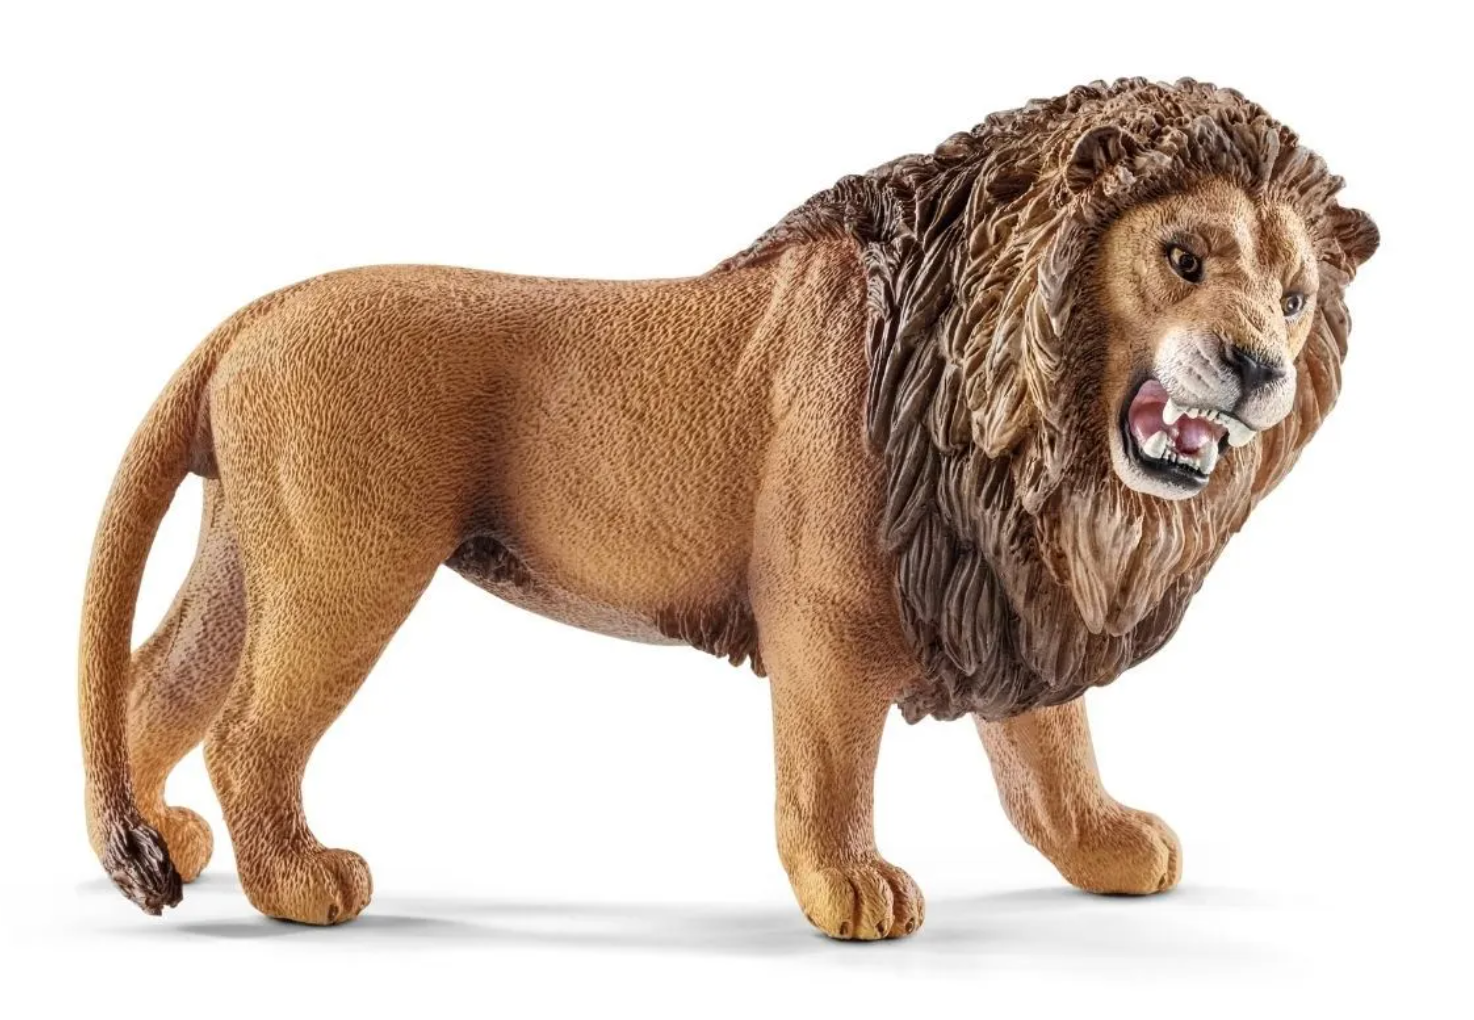 Schleich: Lion, Roaring - Ages 3+